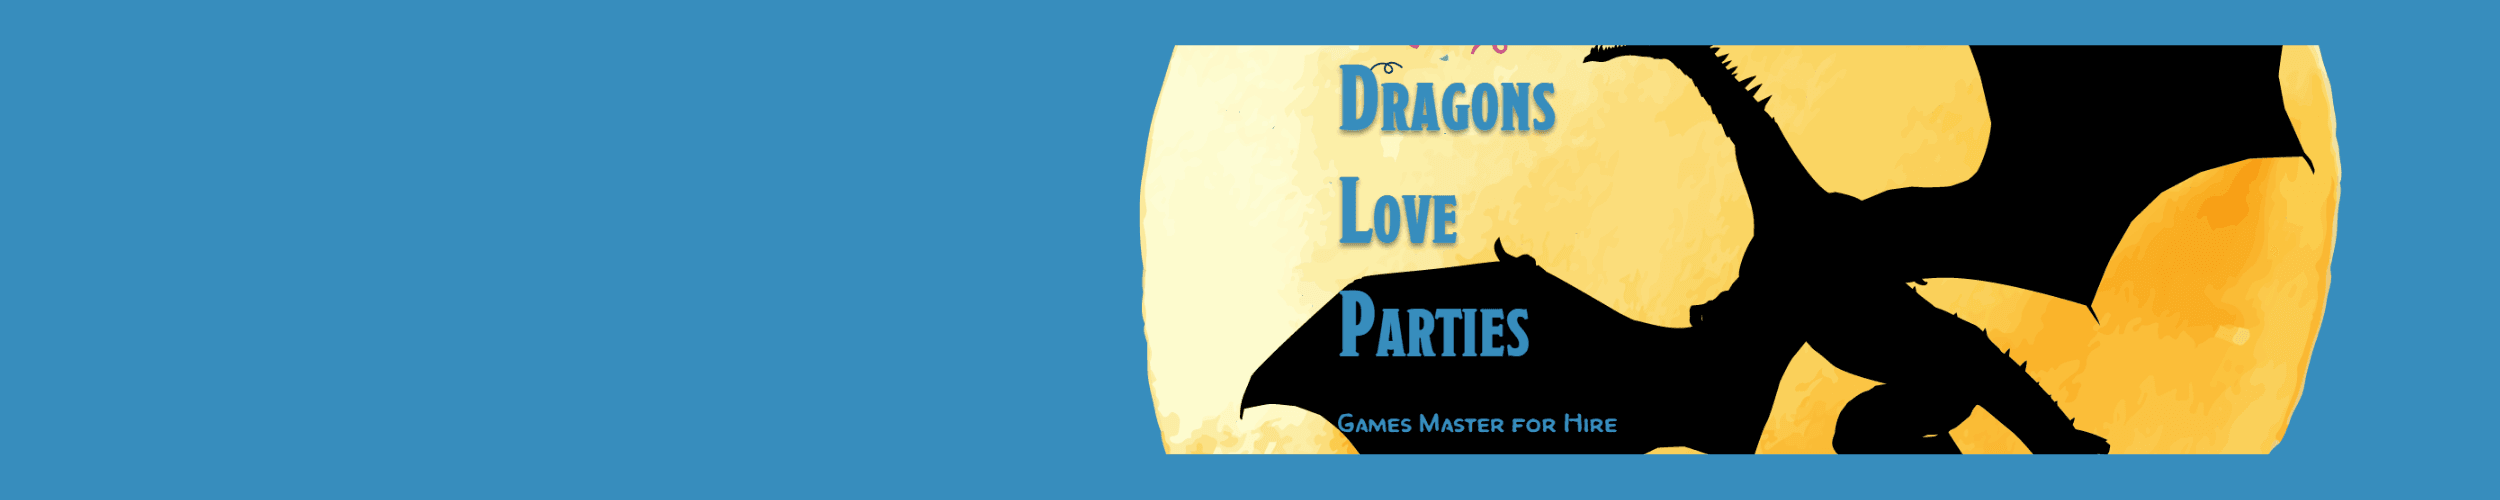 DragonsLoveParties banner